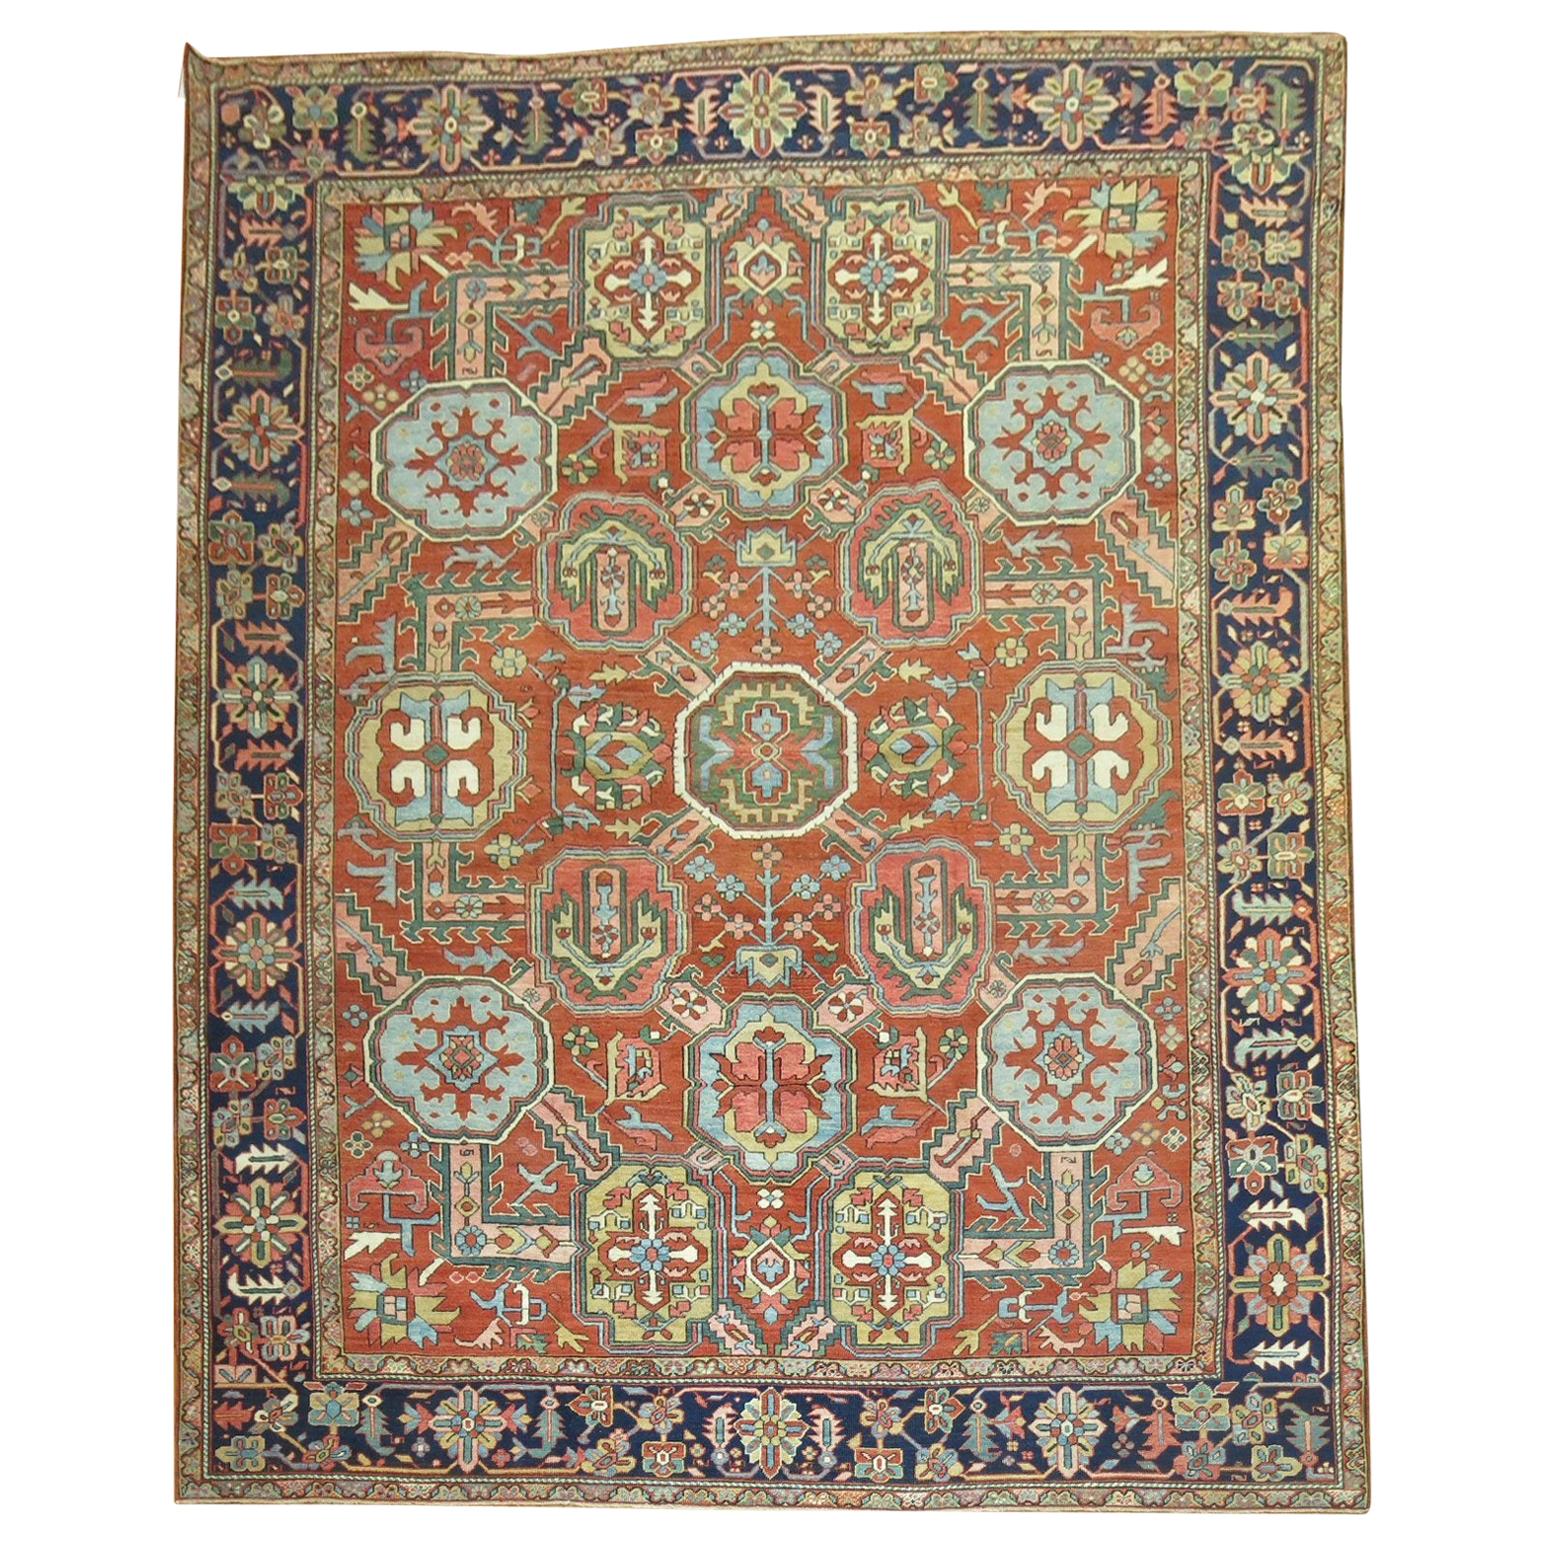 Antique Persian Heriz Carpet, Early 20th Century